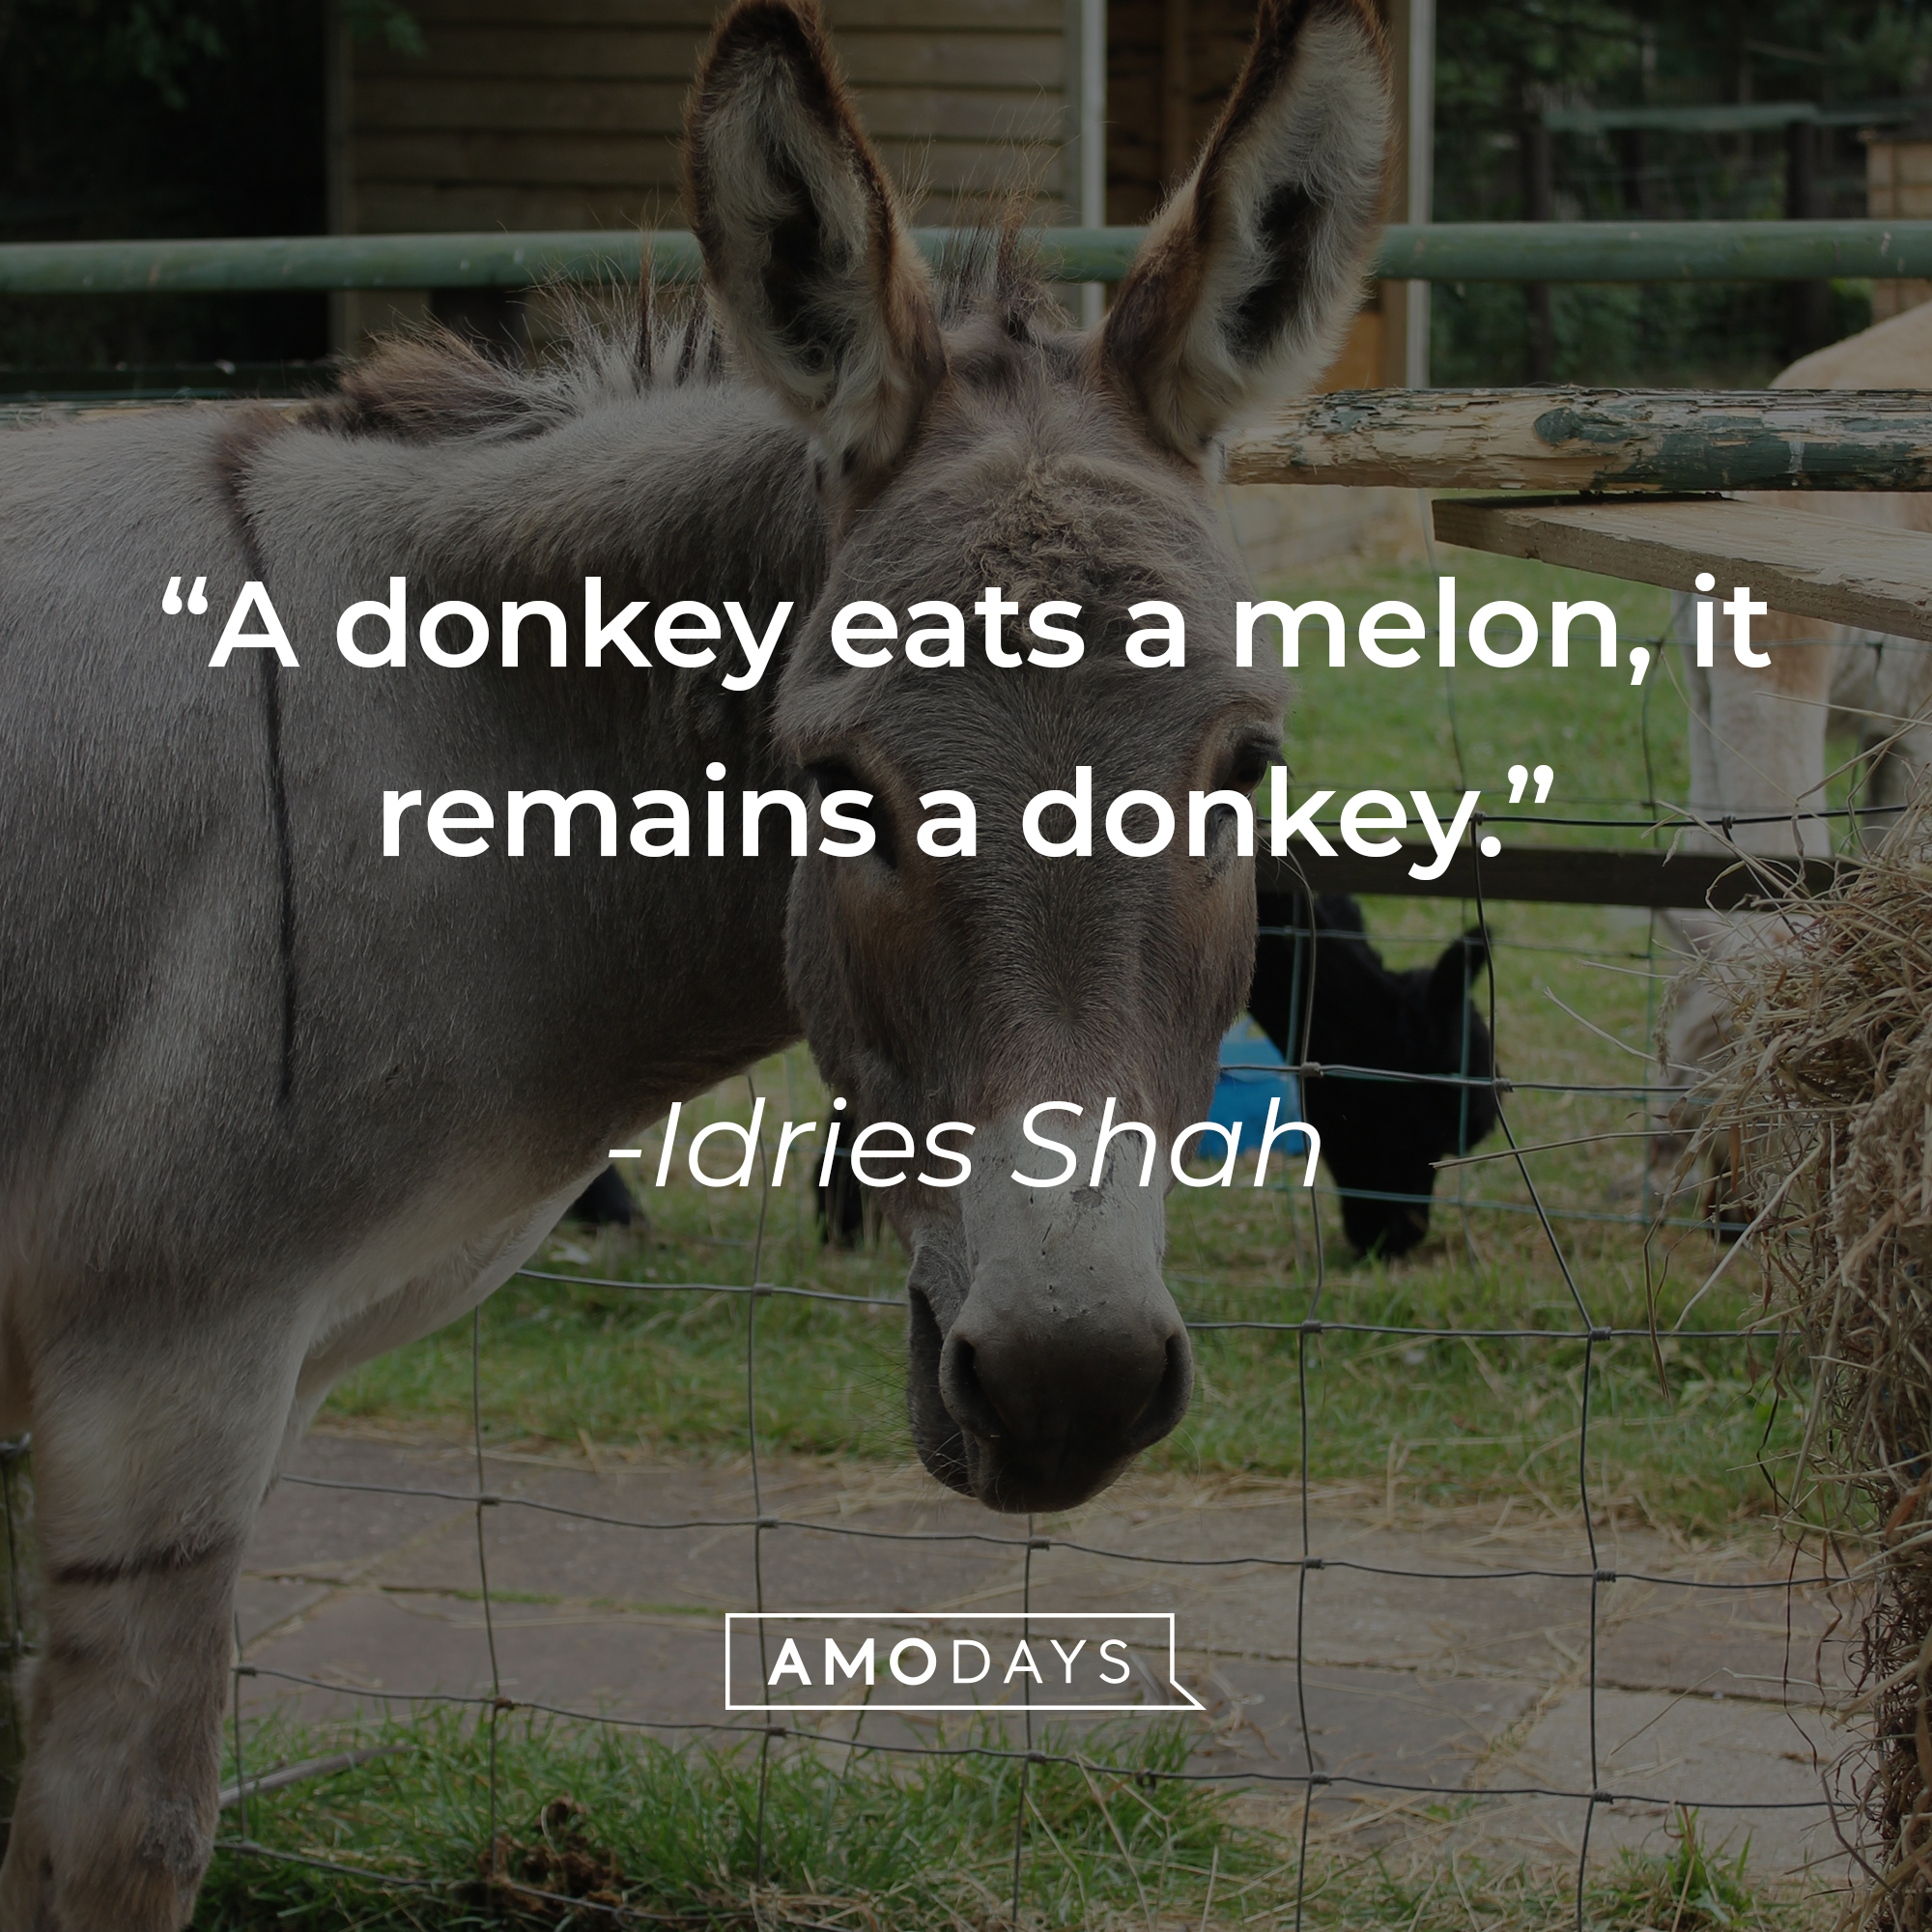 Idries Shah's quote: "A donkey eats a melon, it remains a donkey." | Source: Unsplash